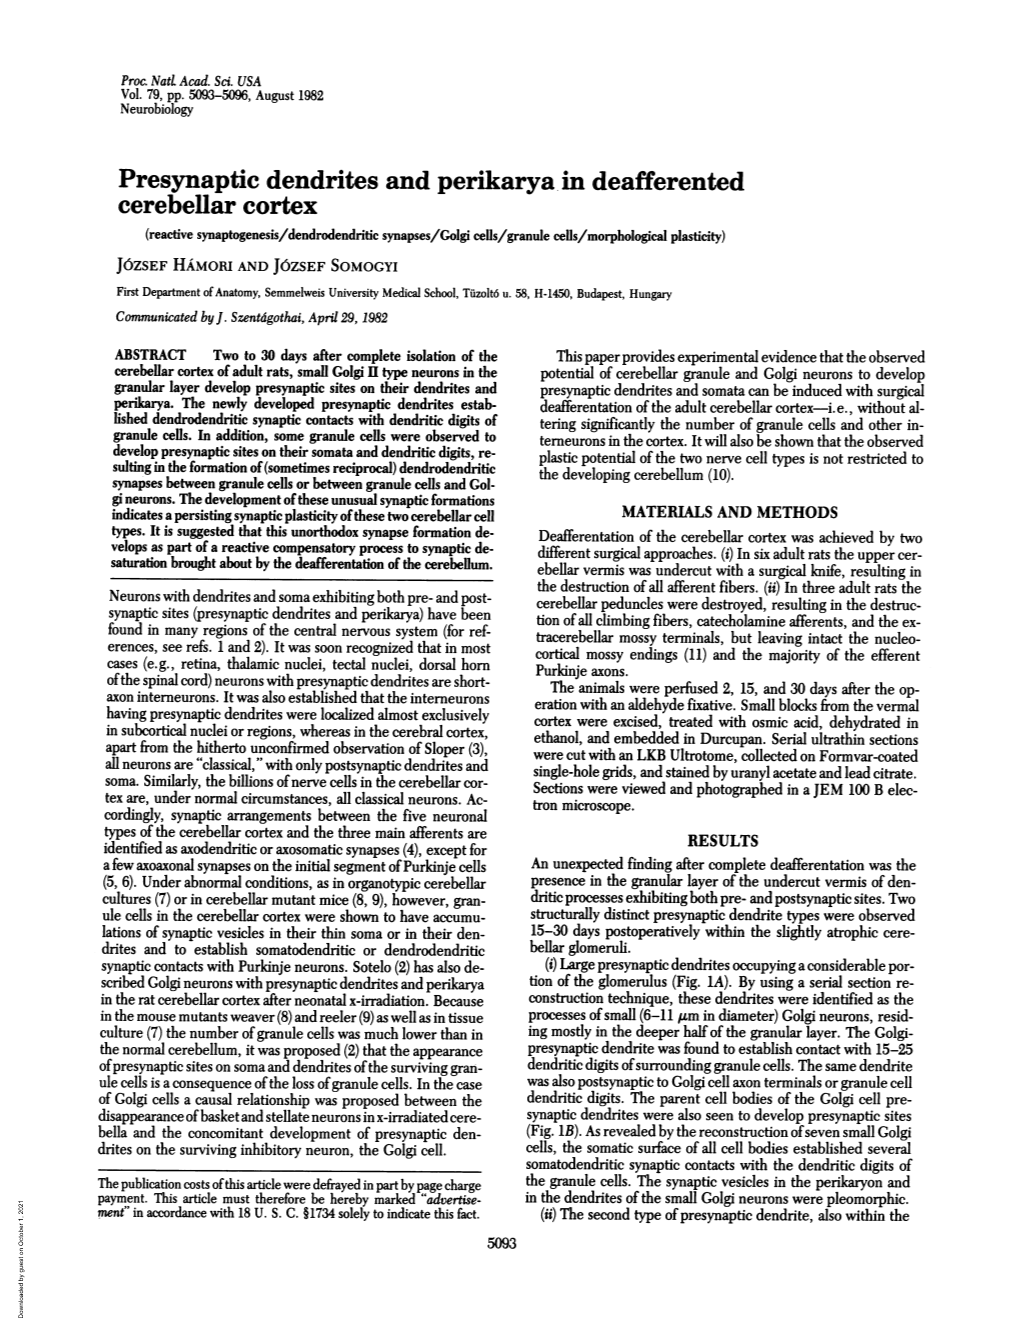 Presynaptic Dendrites and Perikarya in Deafferented Cerebellar Cortex